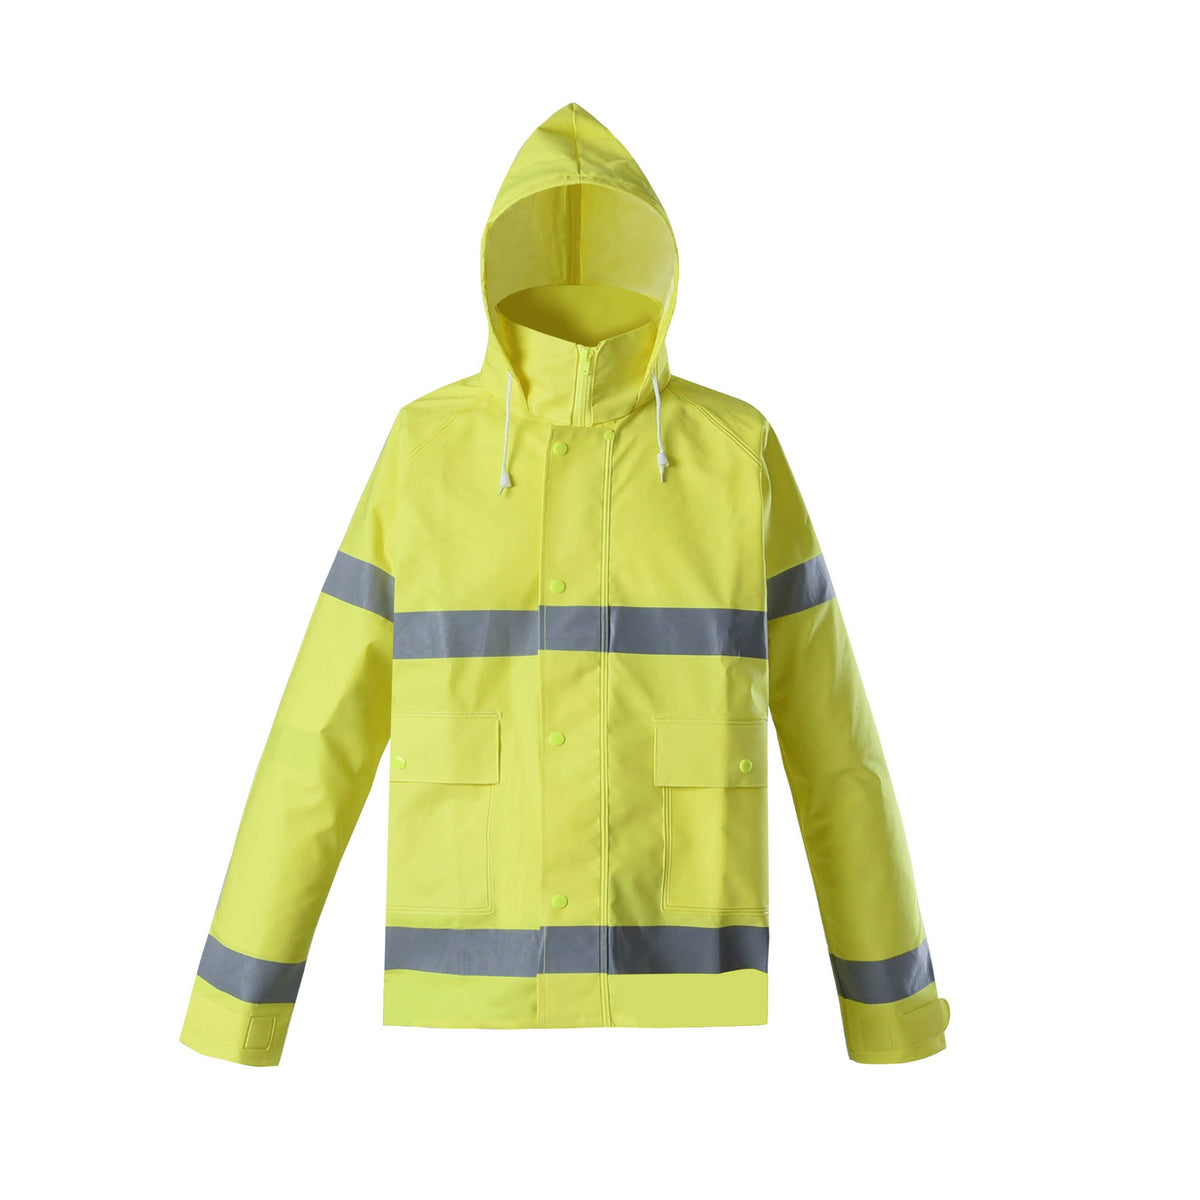 BriteSafety Style 5212 FR Safety Raingear,  Hi Vis Rain Jacket with Hood, Waterproof, ANSI 107 Class 3 Compliant